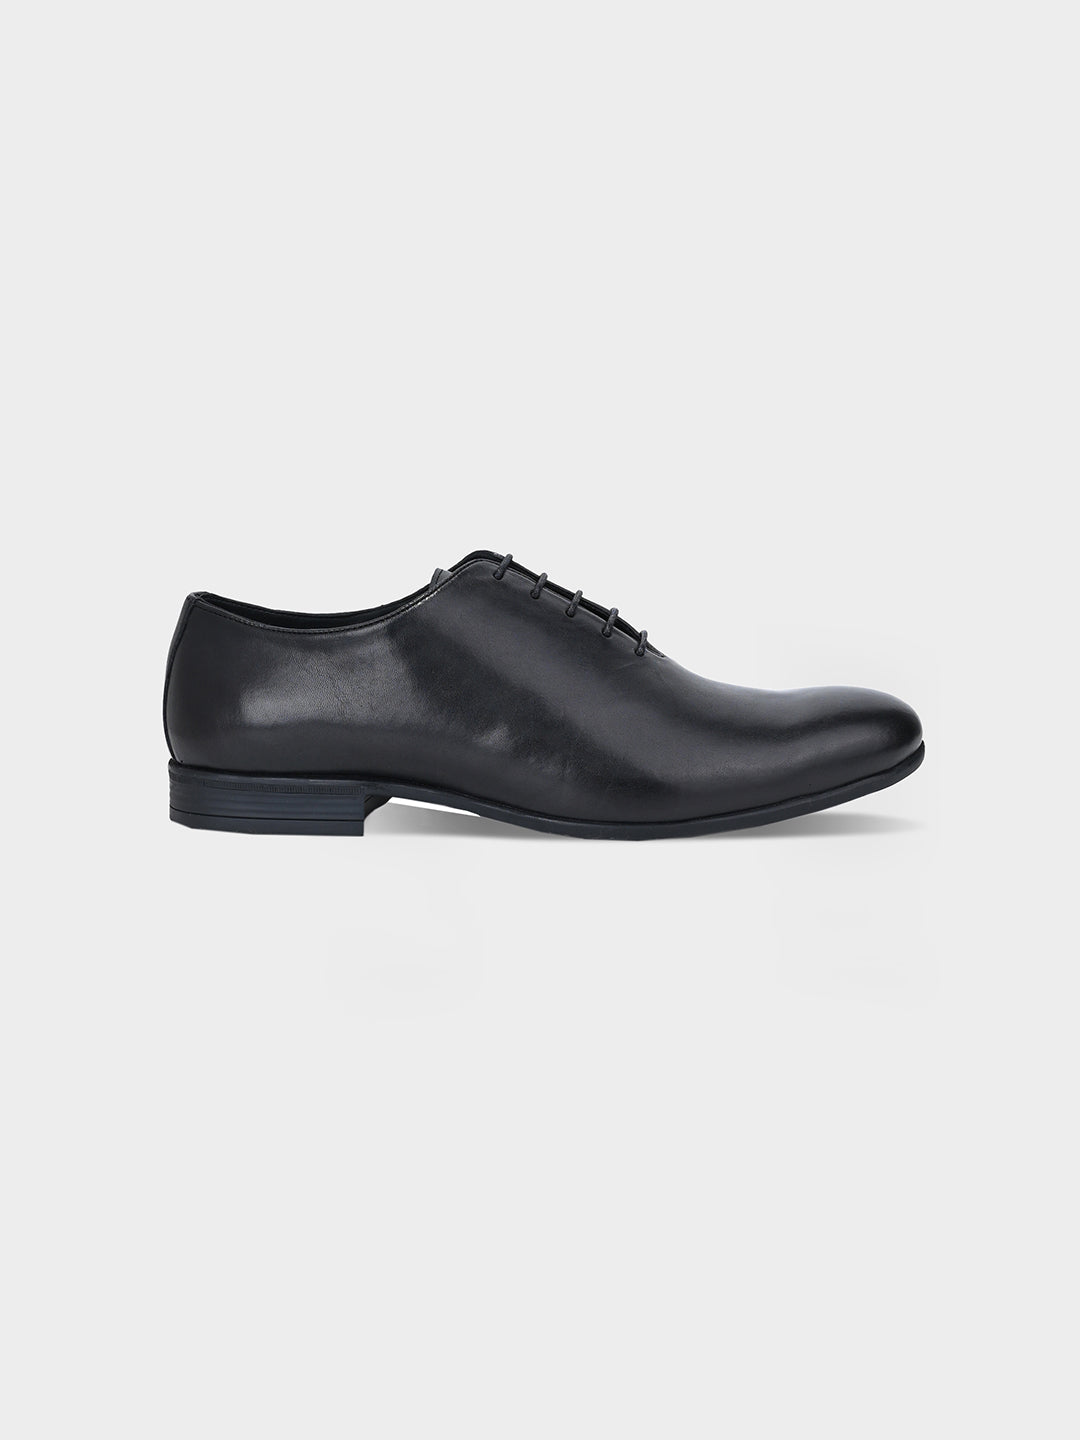 Men's Black Leather Lace-Up Oxford Shoes